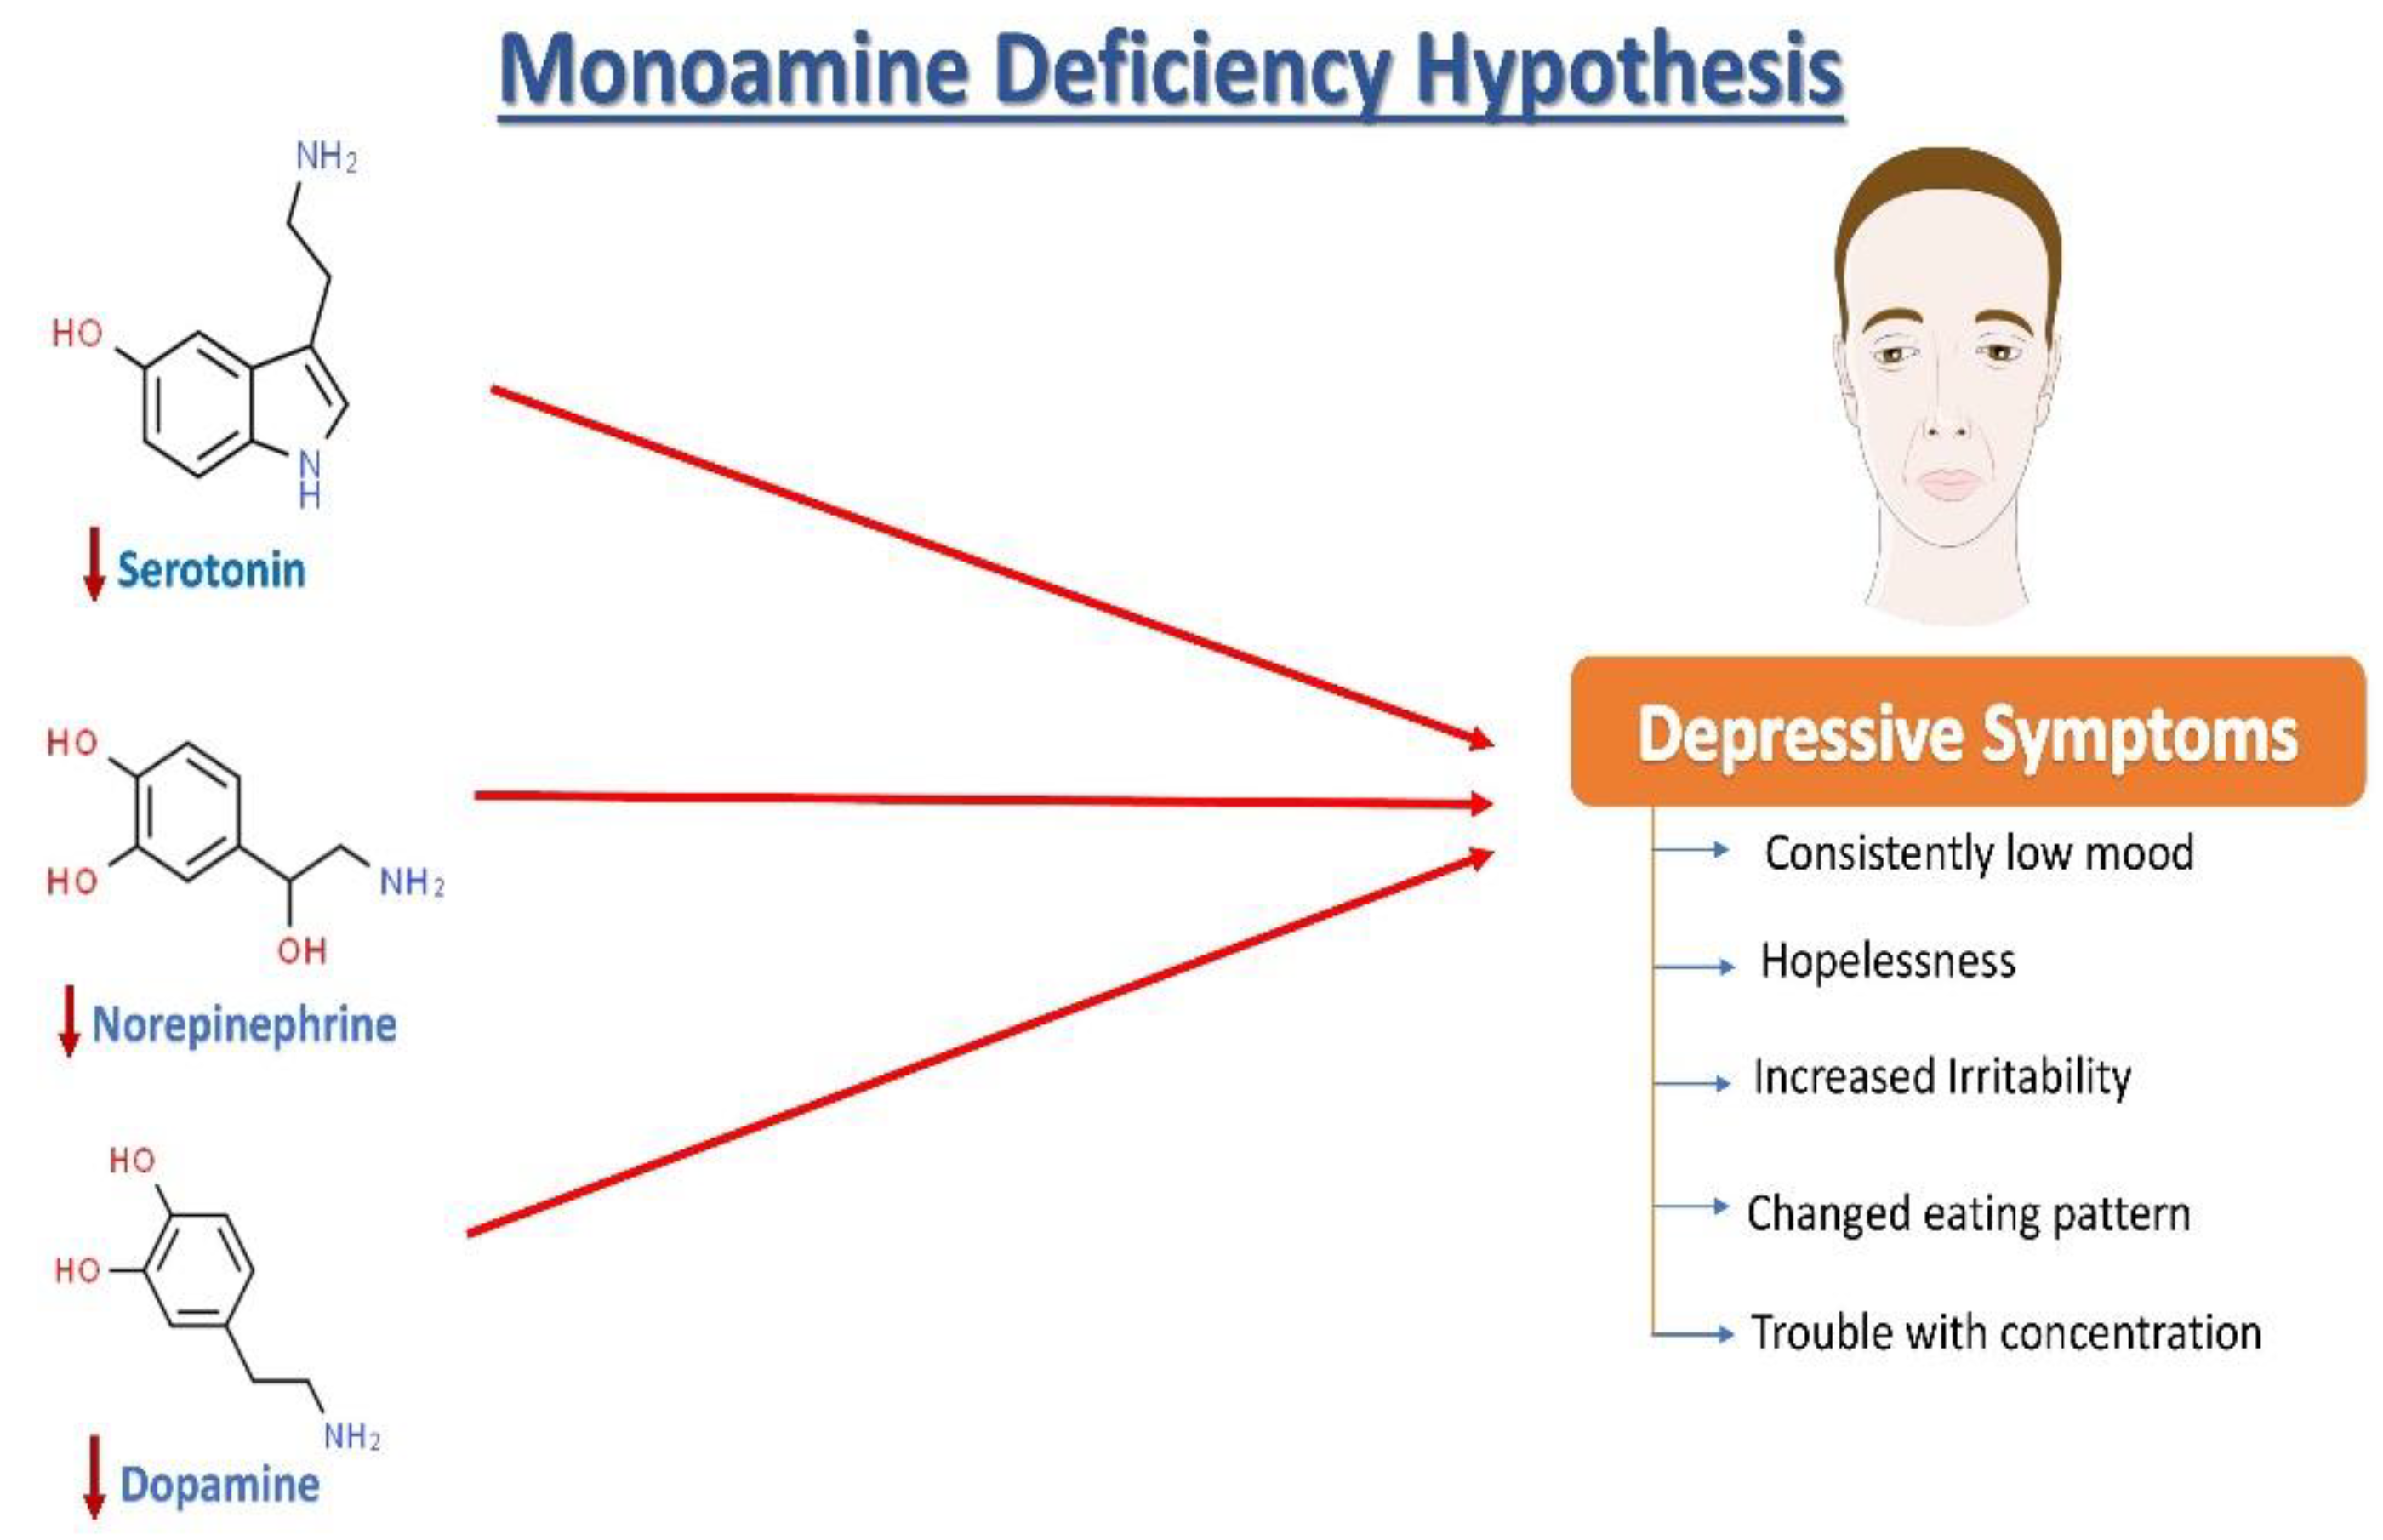 the monamine hypothesis of depression states that